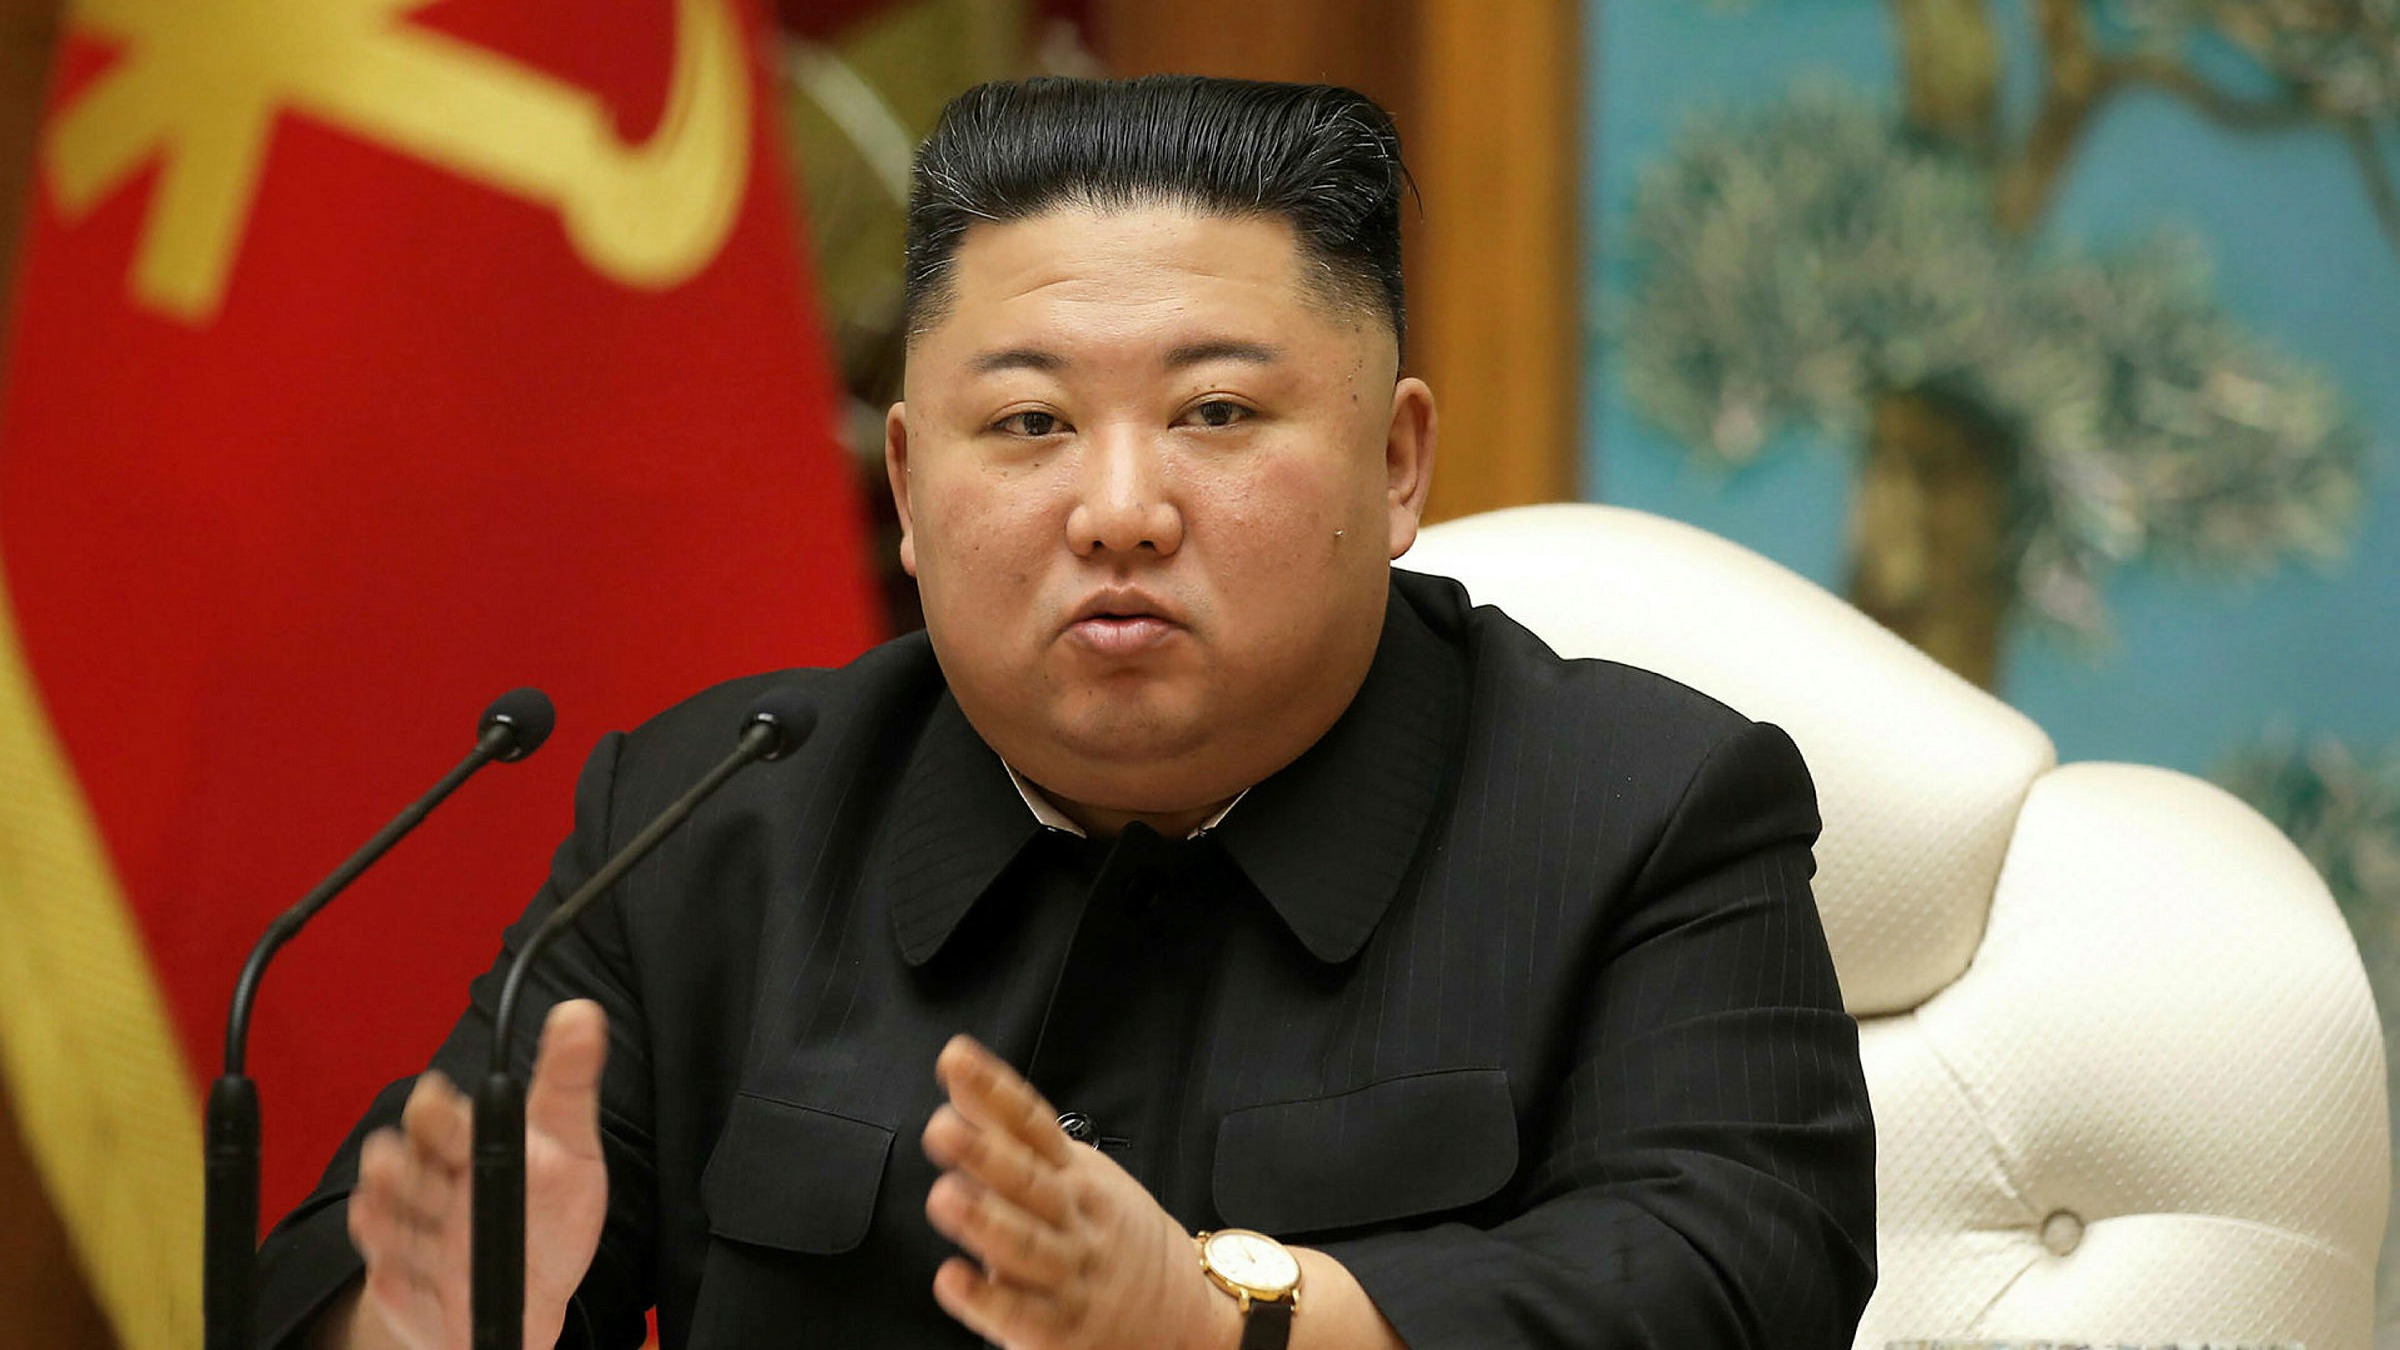 Kim Jong Un to unveil new economic plan as North Korea crisis deepens |  Financial Times